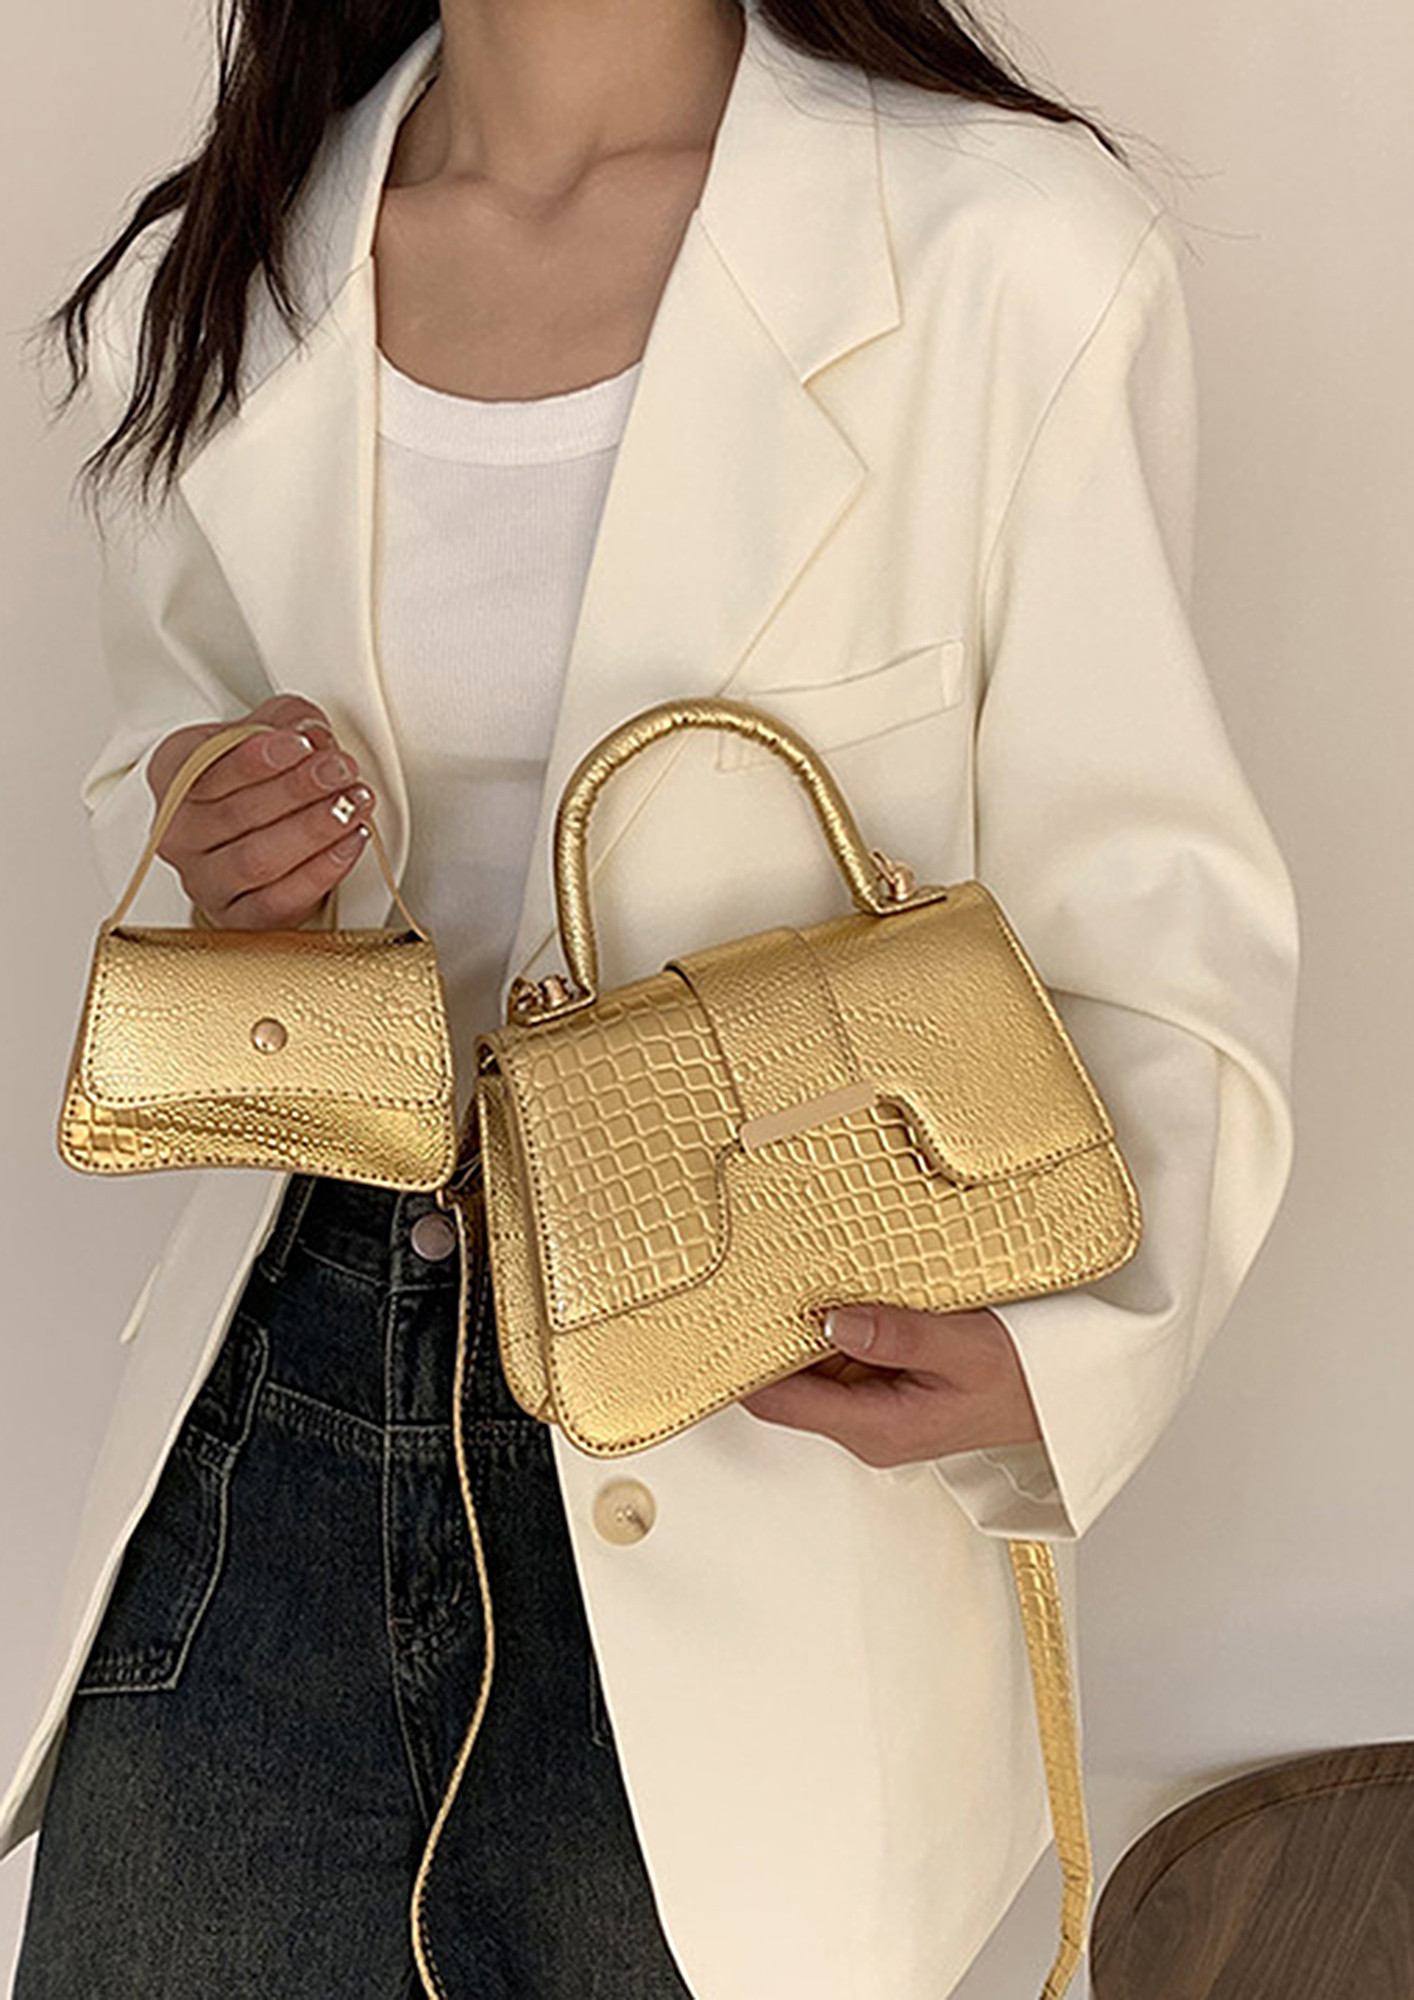 Gucci Logo Embossed Leather Shoulder Bag in Brown | Lyst